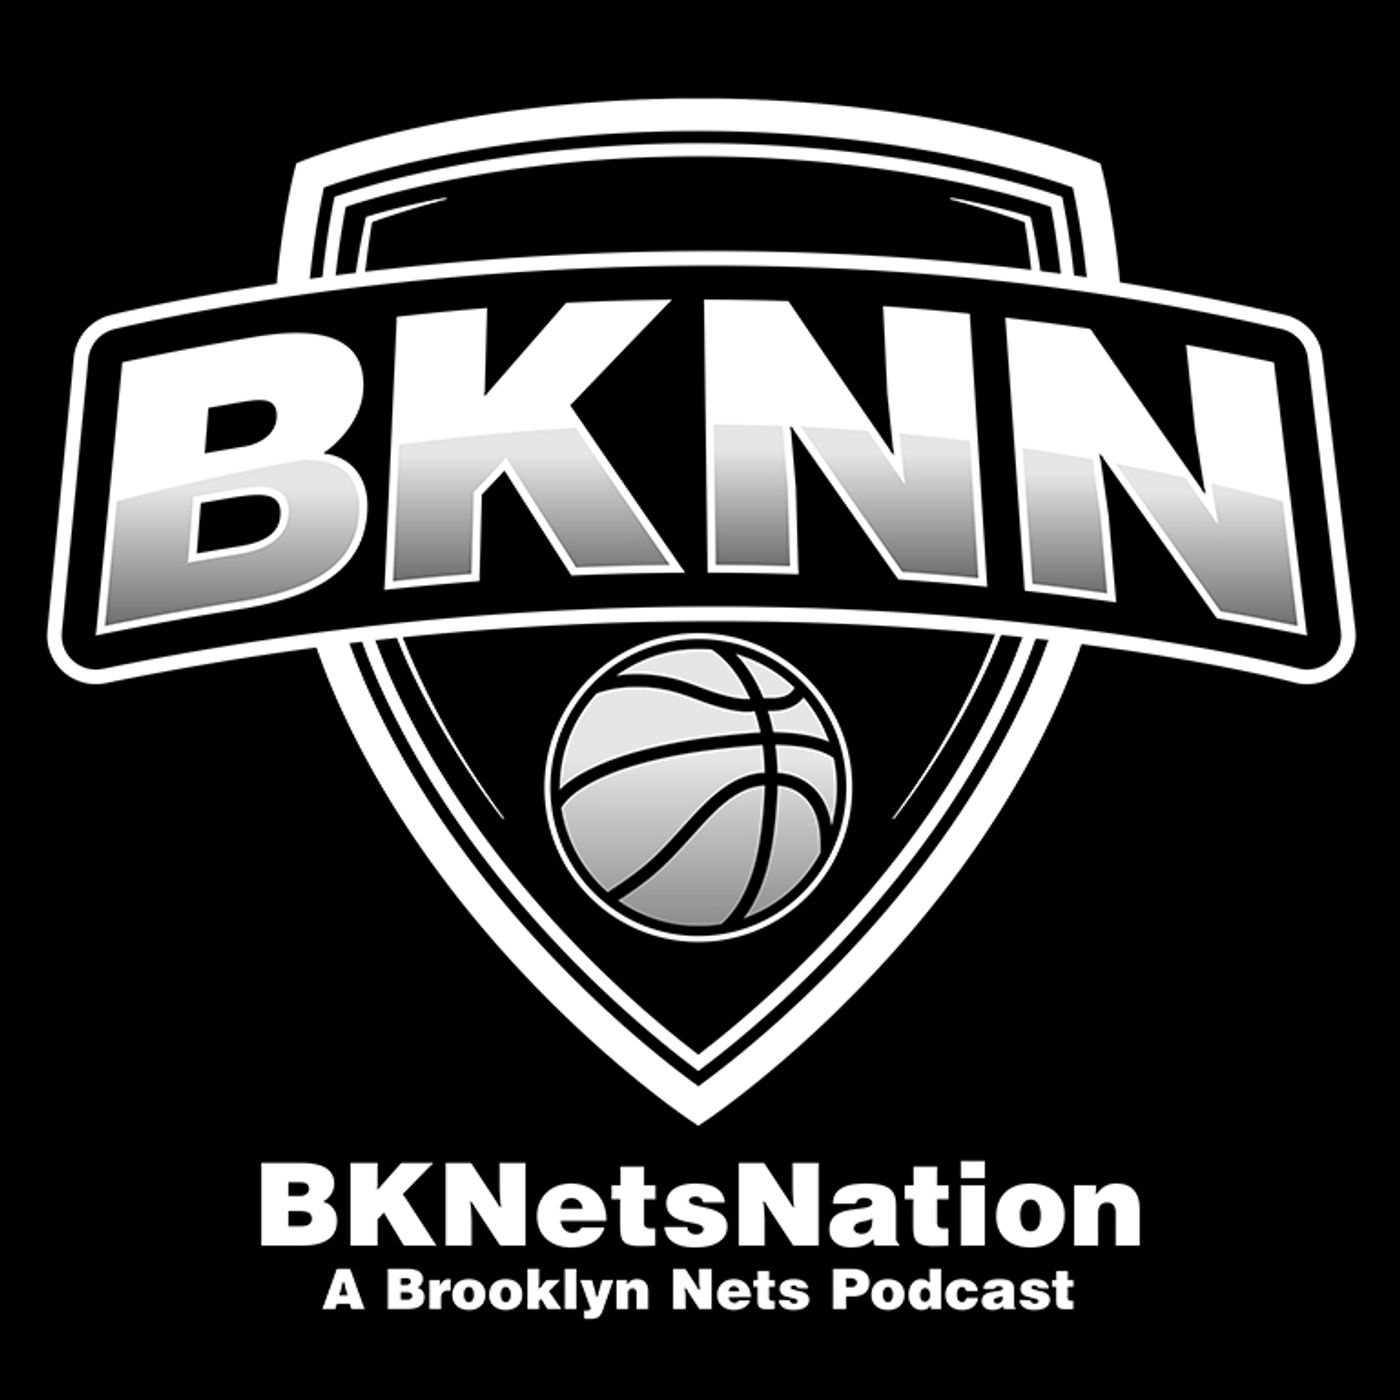 BKNetsNation Live Podcast